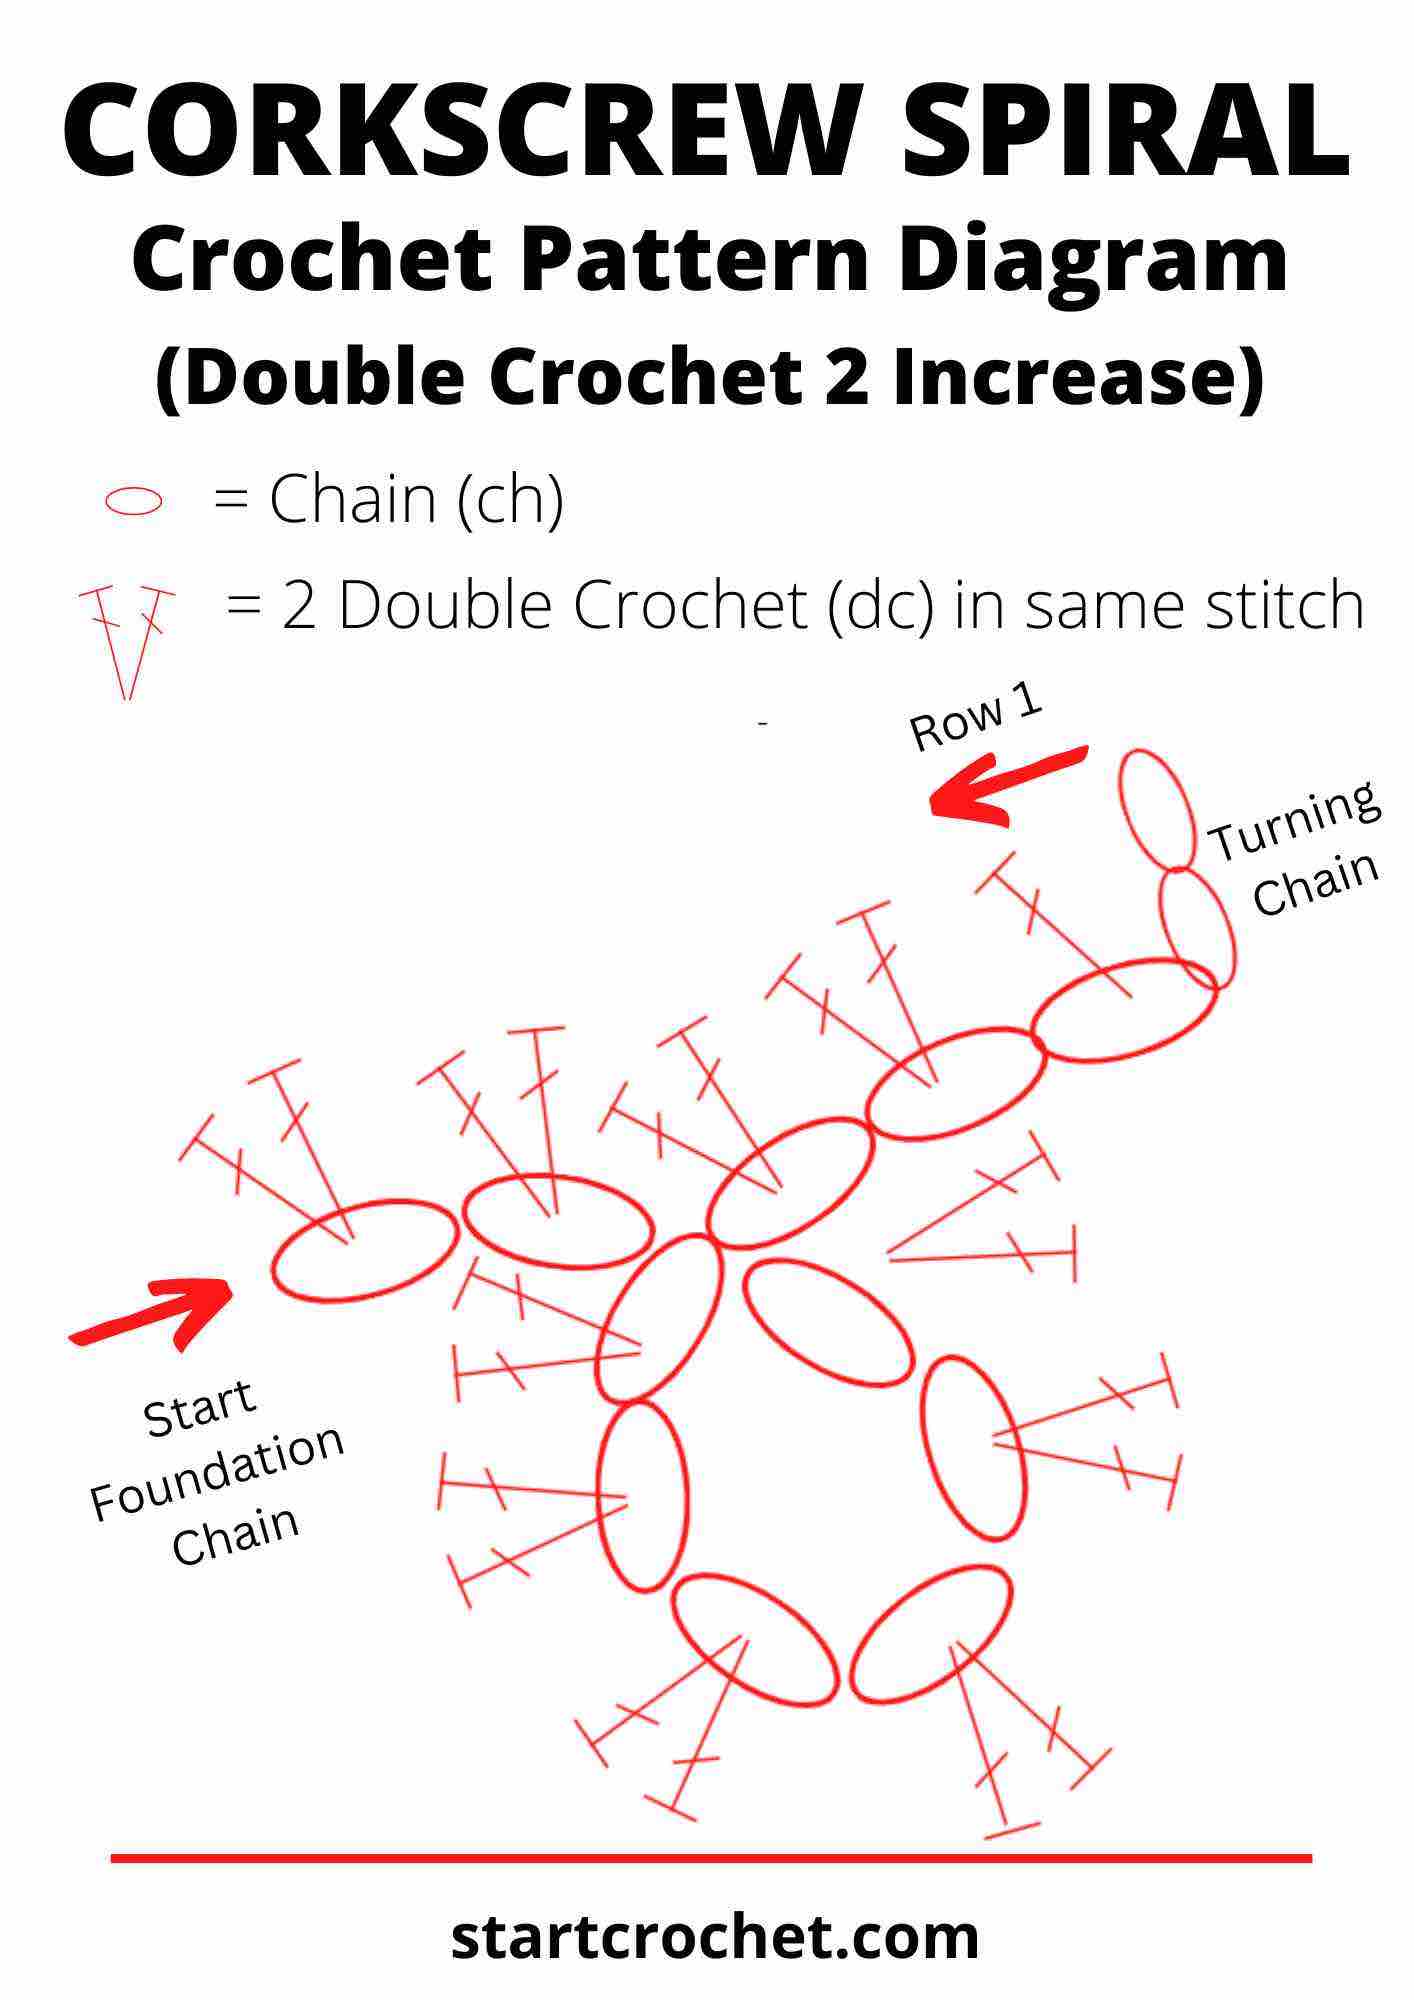 Corkscrew-Spiral-pattern-Diagram-2-dc-increase